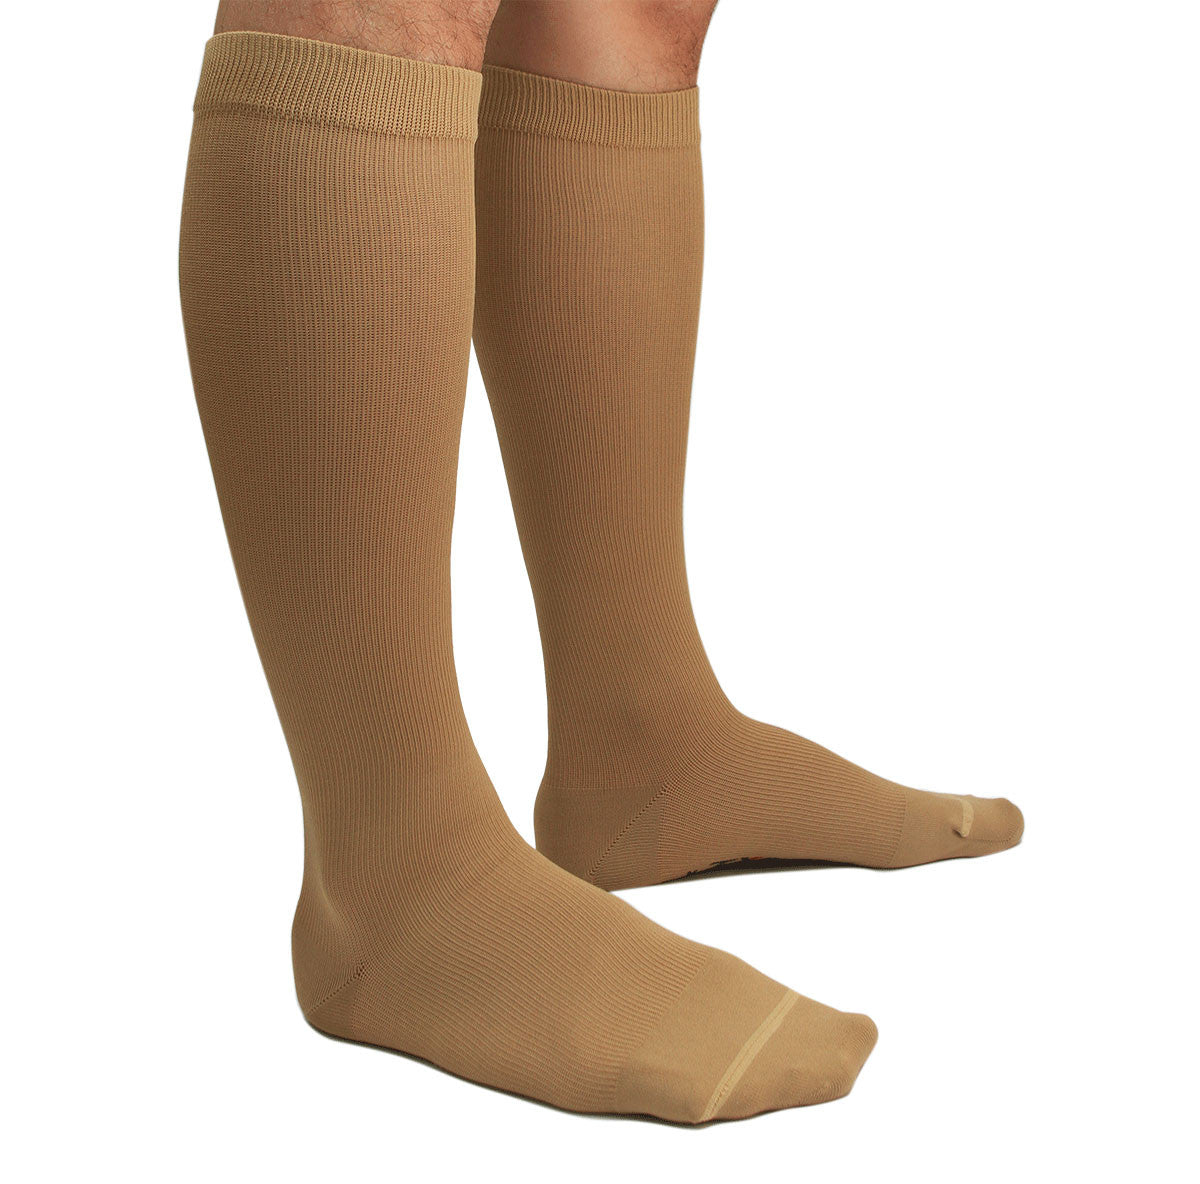 TXG medical compression socks | Live in comfort | TXG Compression Wear